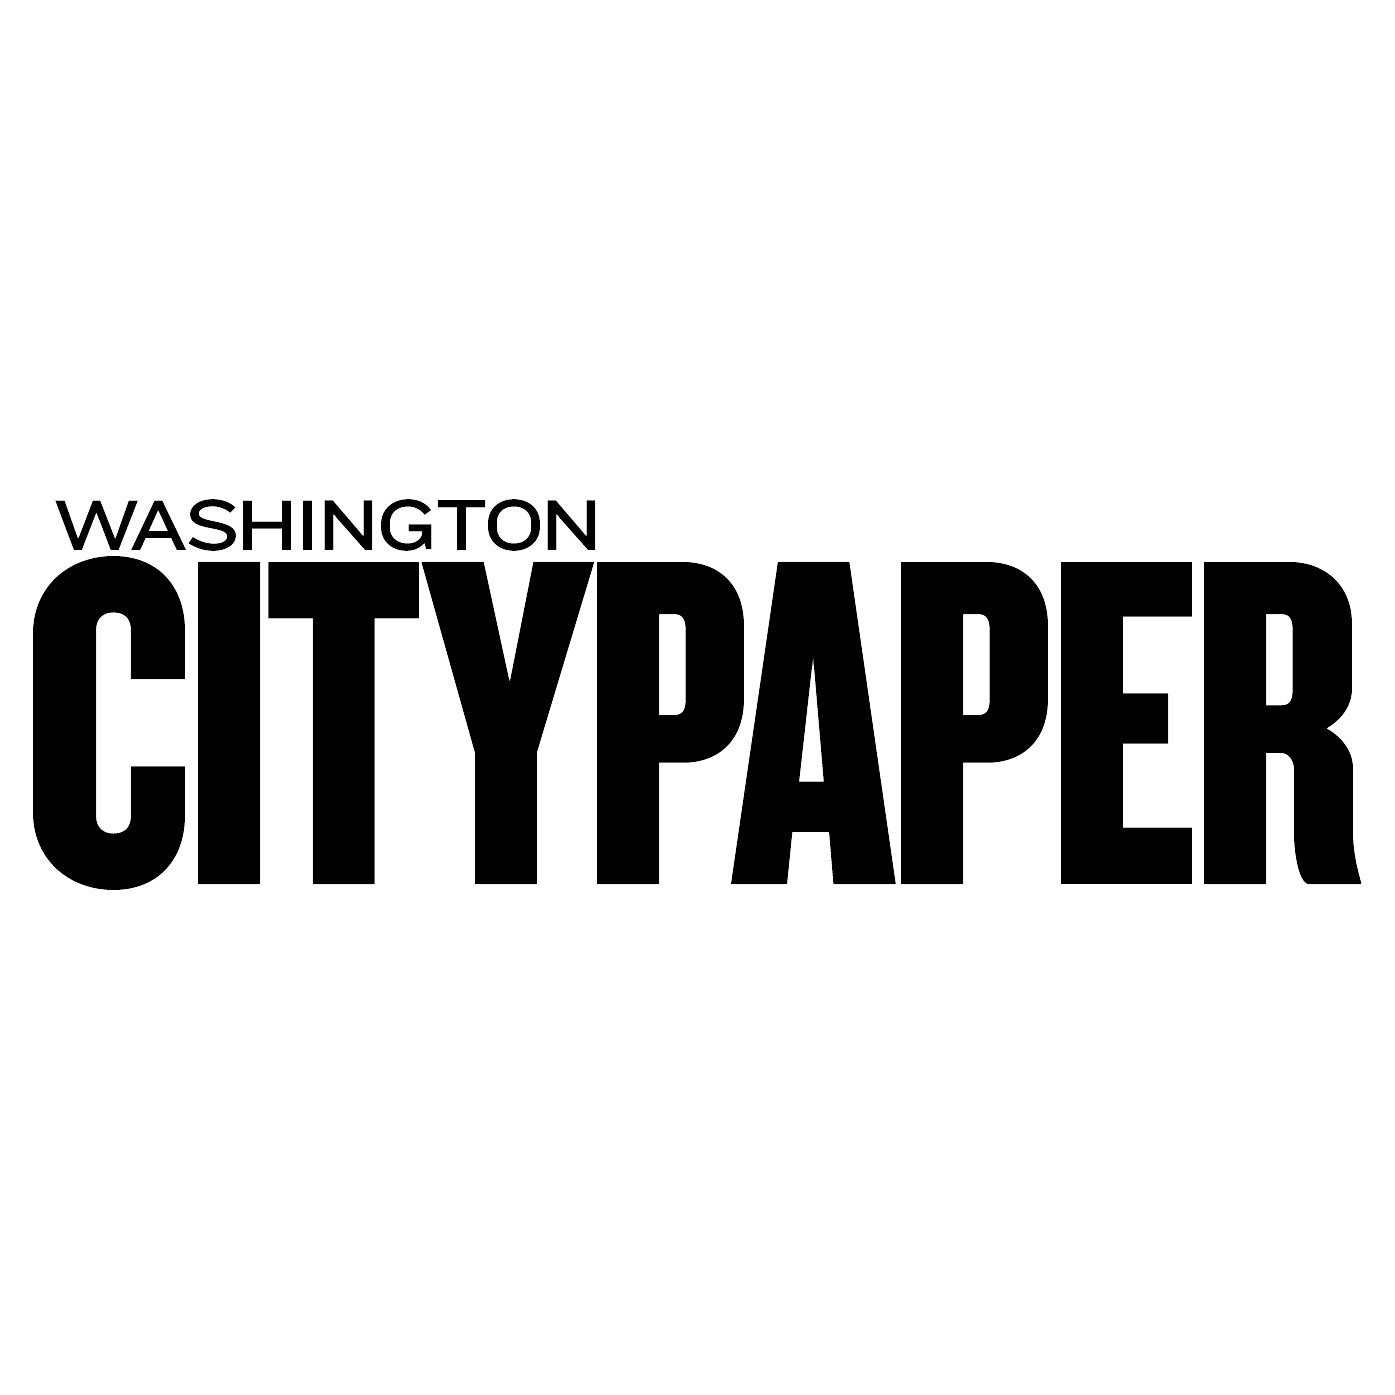 Washington Citypaper Logo.png